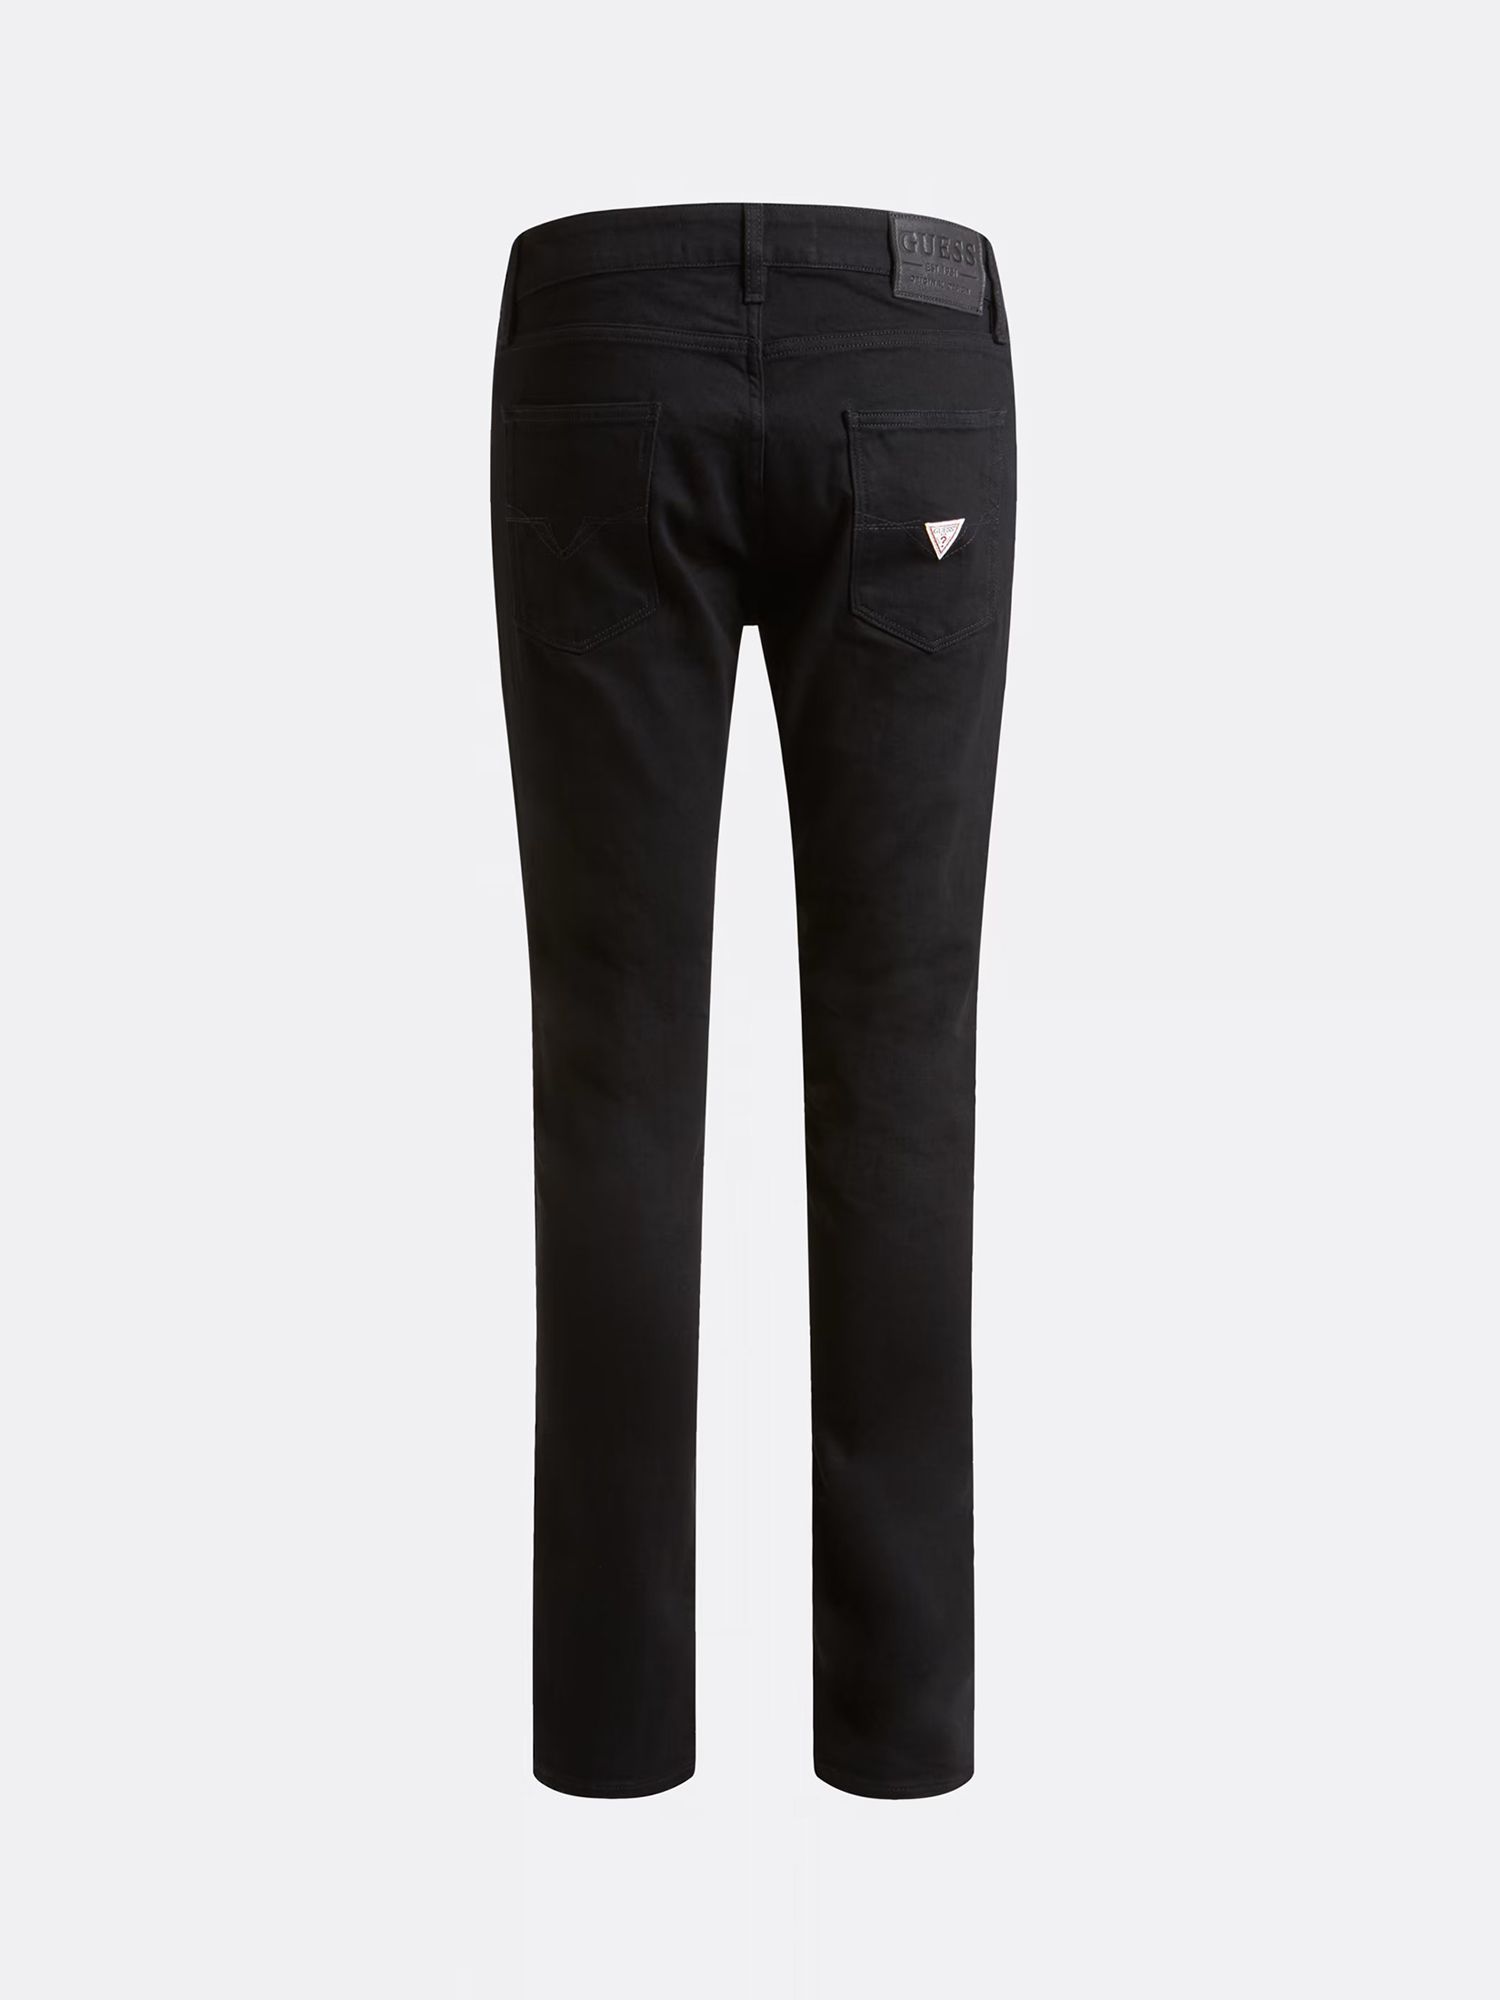 GUESS Chris Skinny Fit Denim Jeans, Carry Black, W30/L32